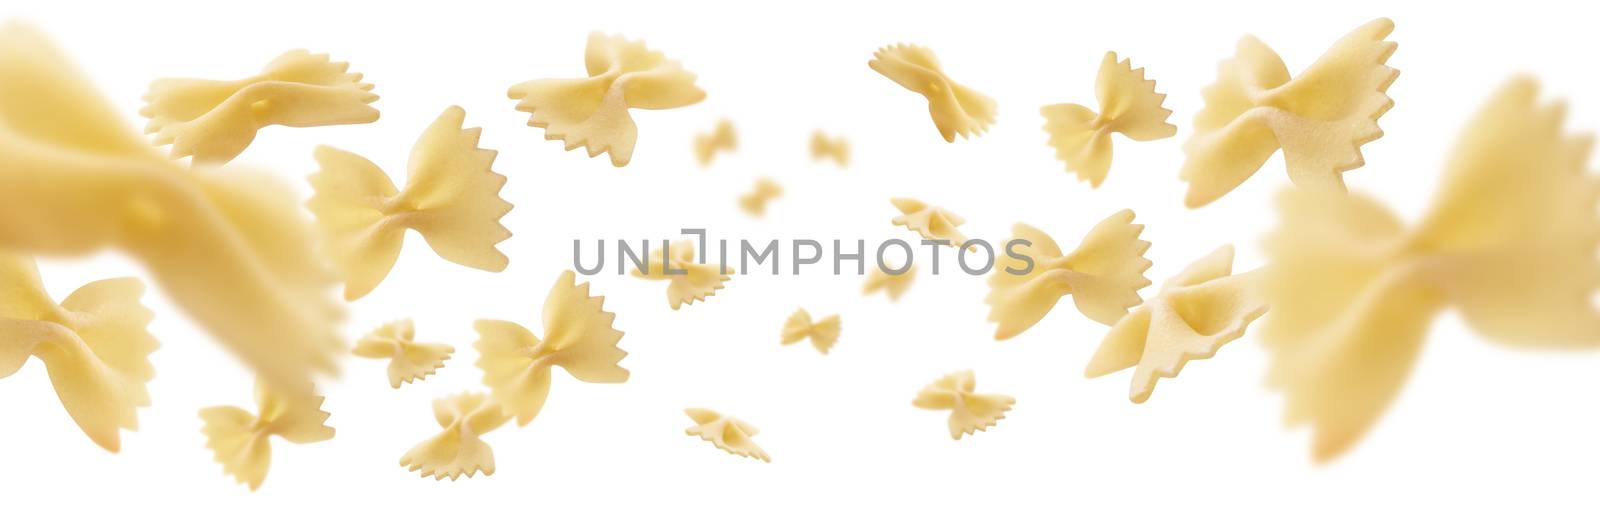 Italian pasta levitating on a white background.